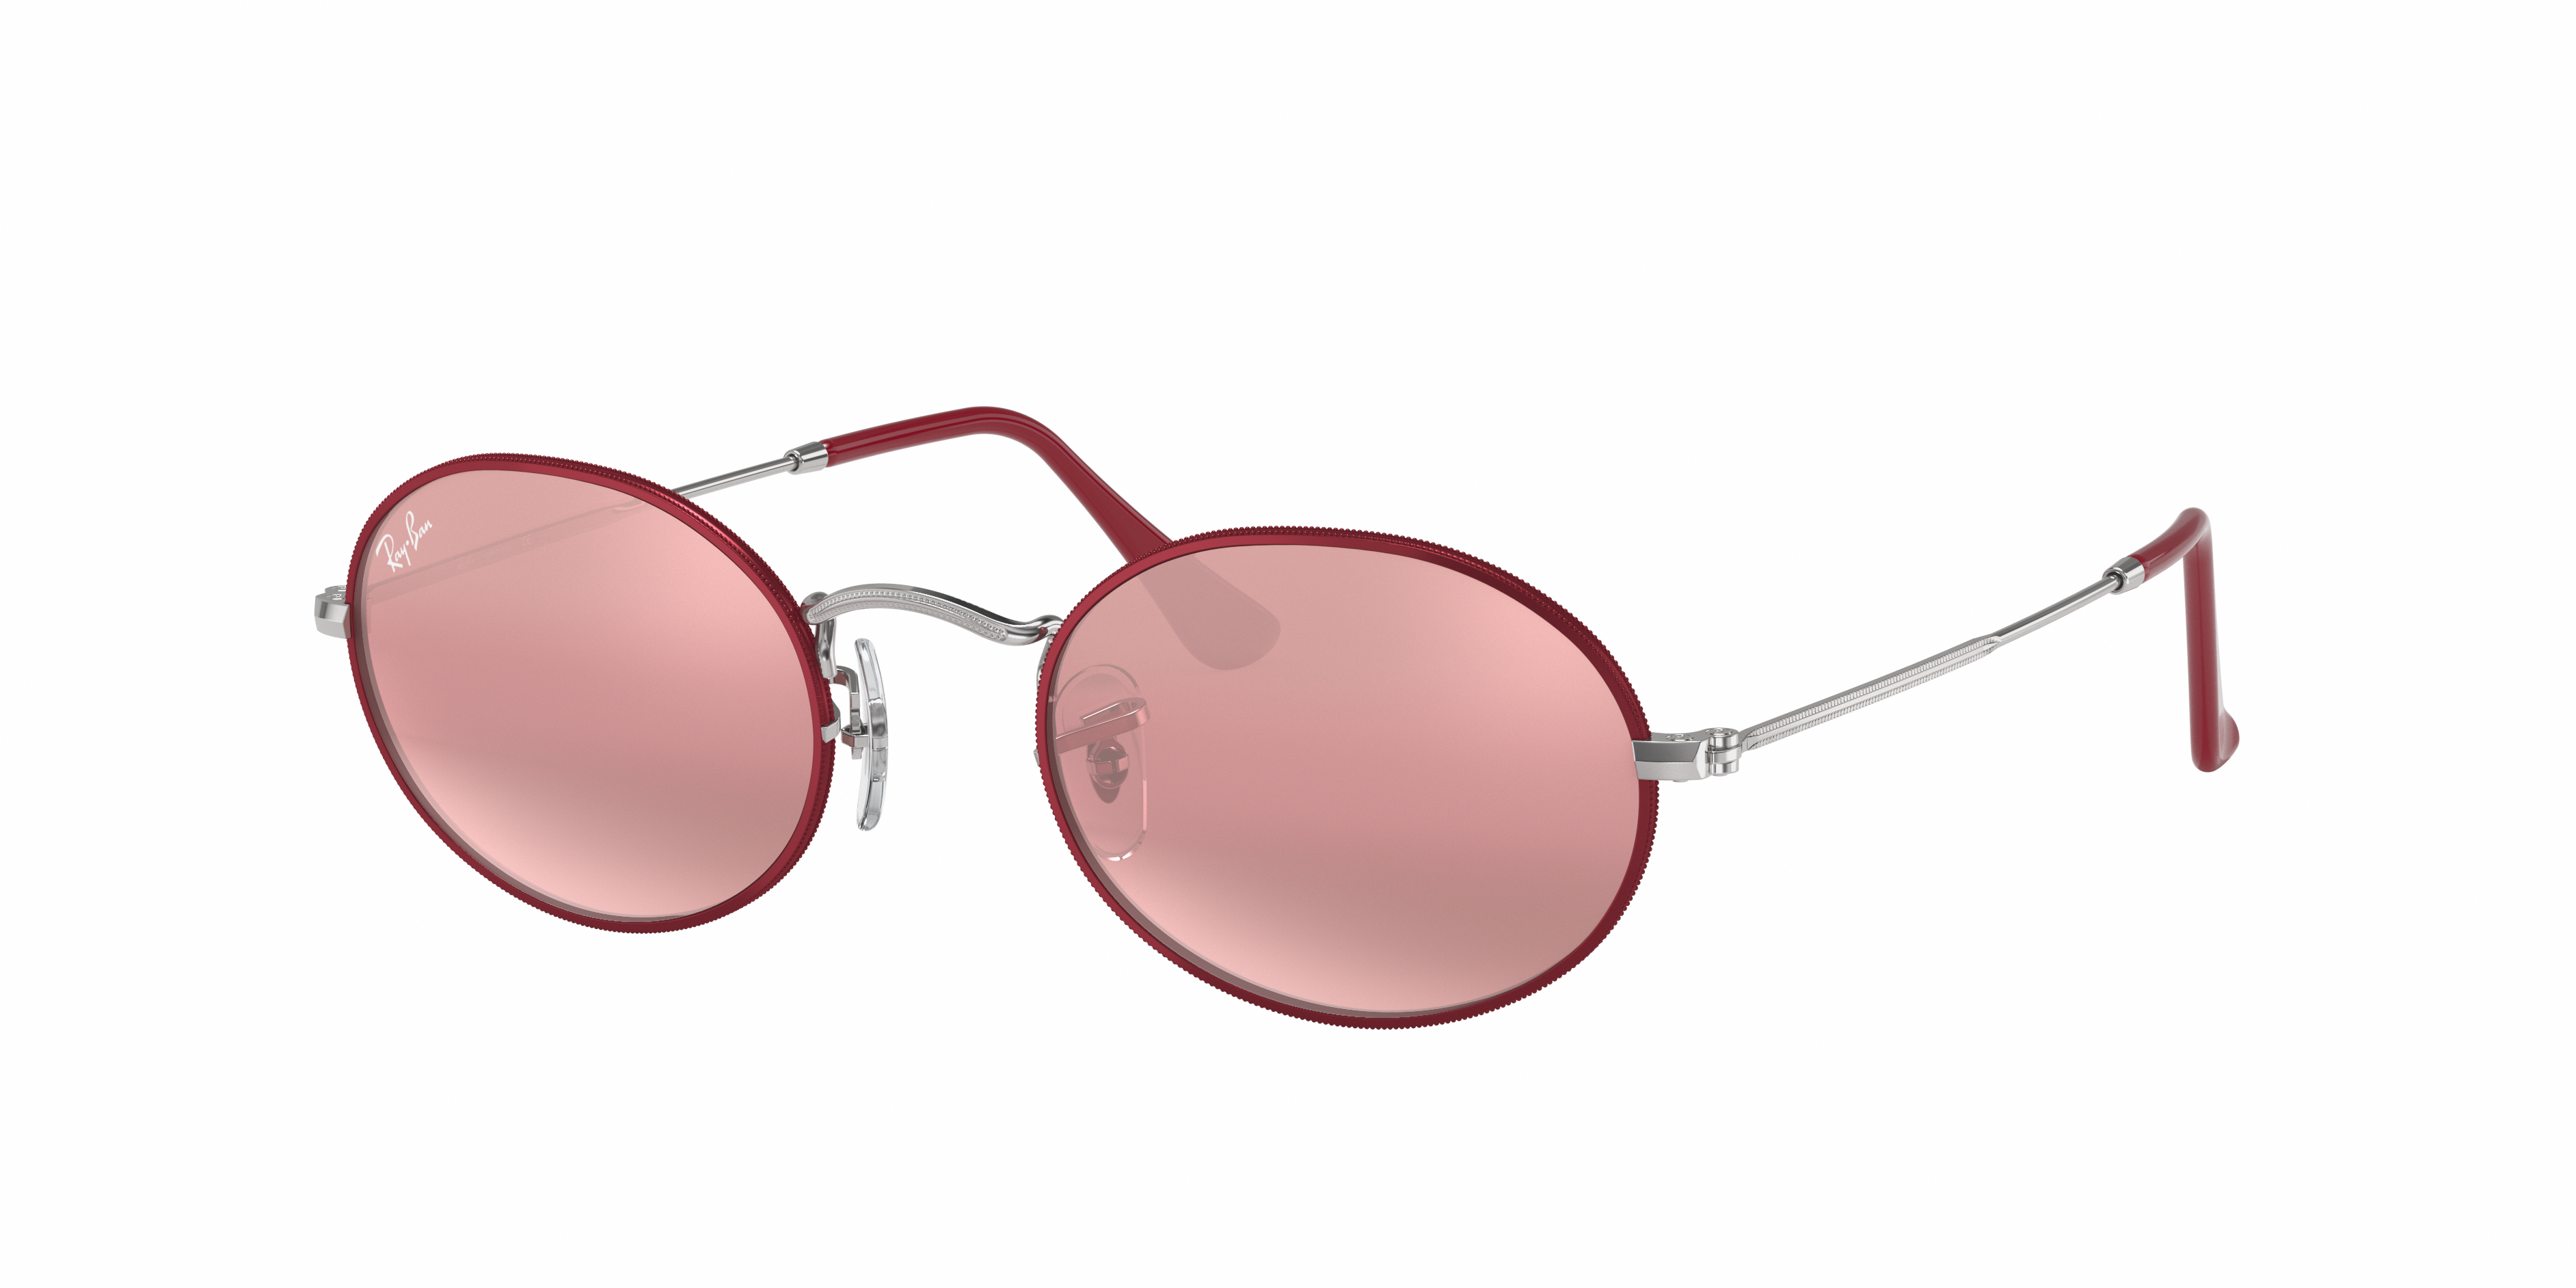 ray ban purple frame sunglasses